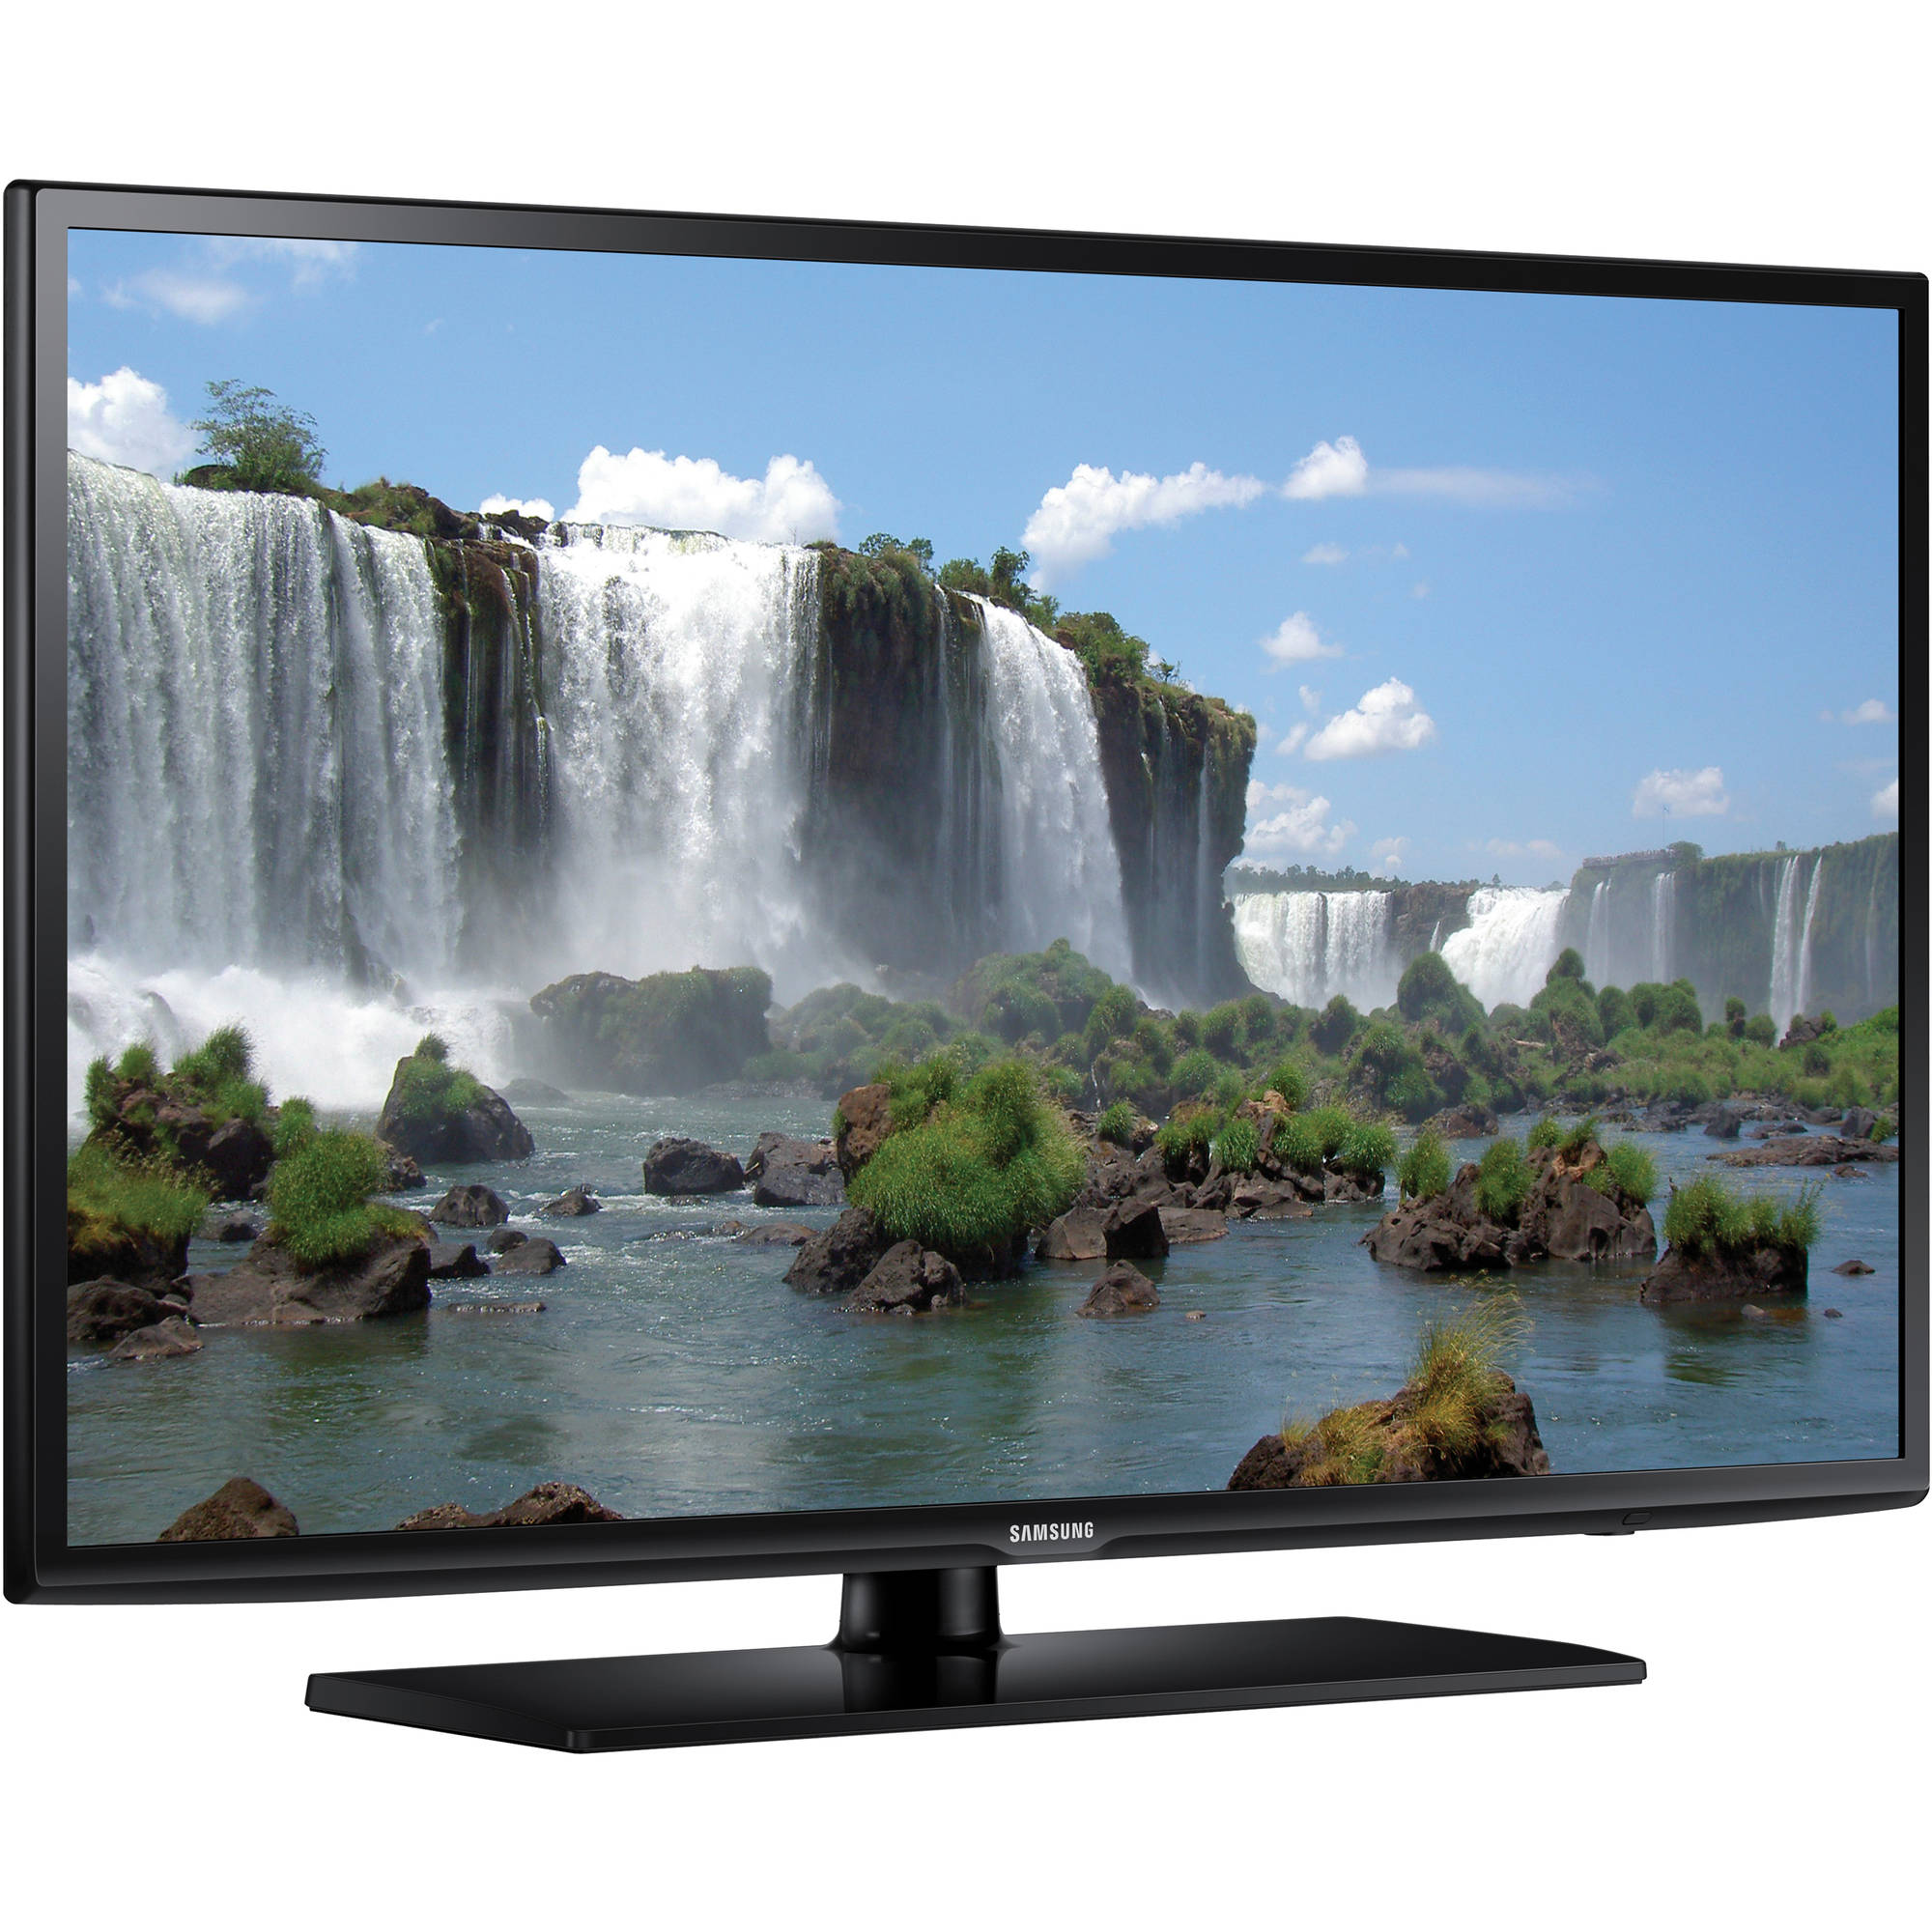 Samsung UN55J6200AF/XZA 55 Inch Led 1080P Smart HD TV - Samsung Parts USA